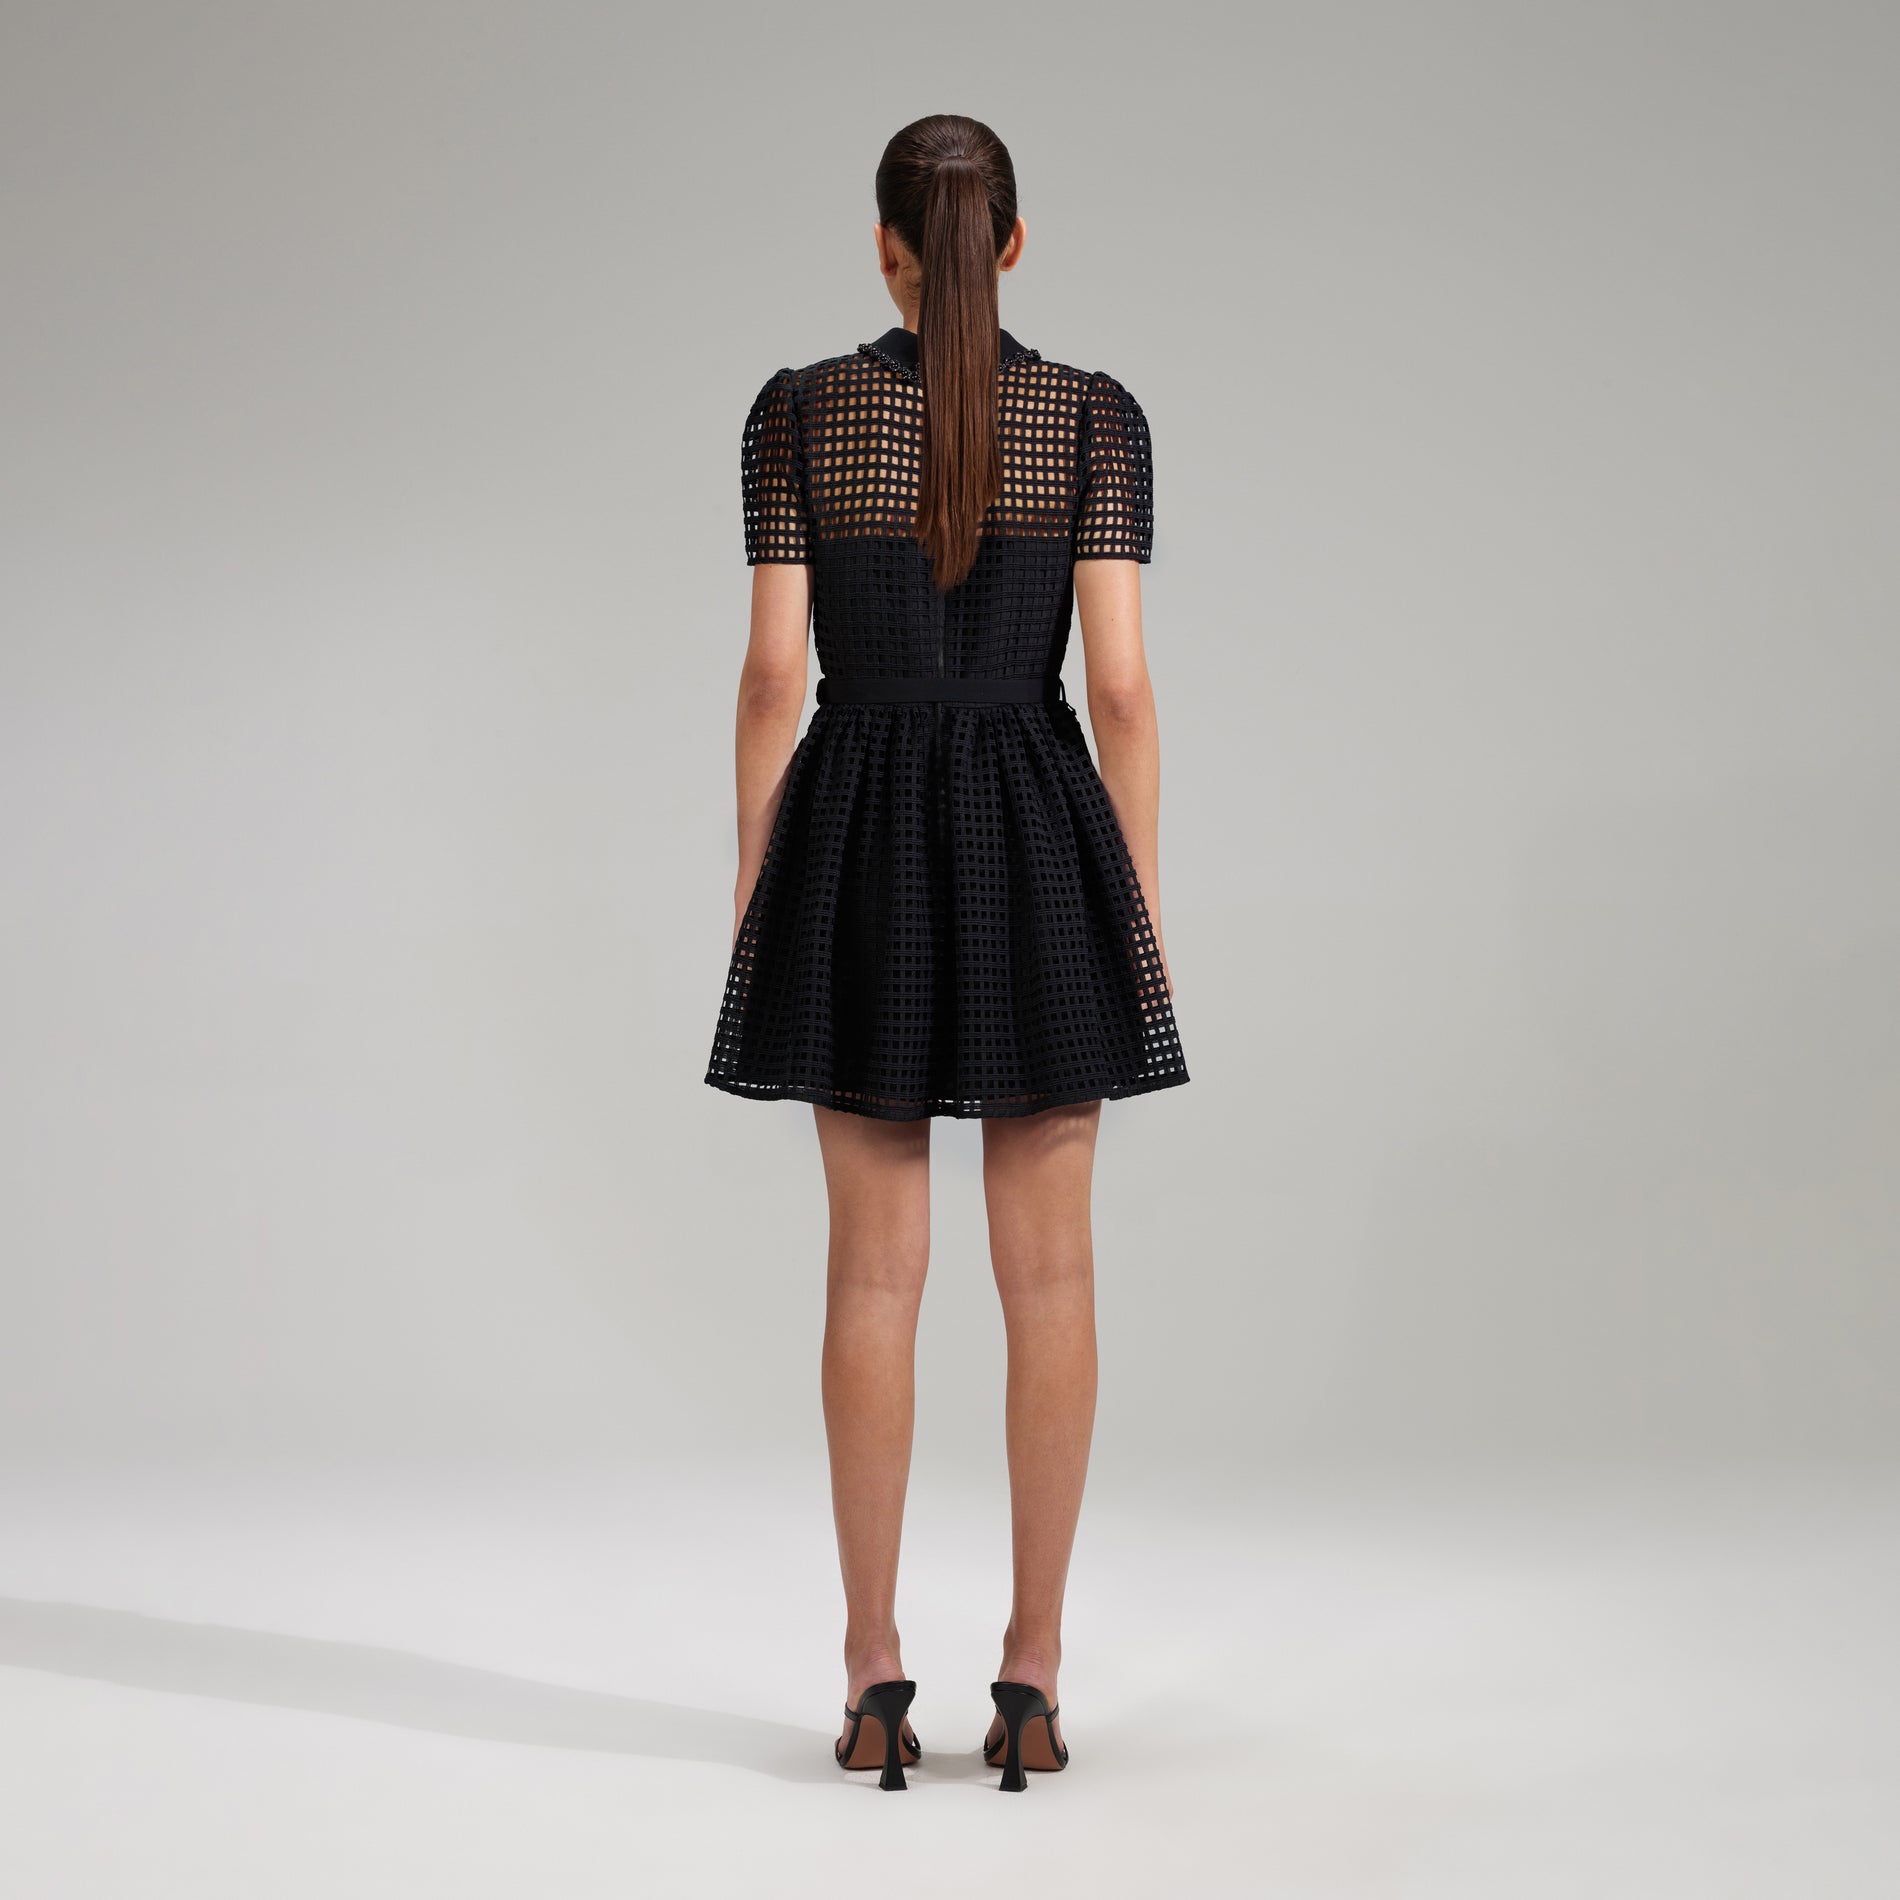 A woman wearing the Black Grid Lace Mini Dress